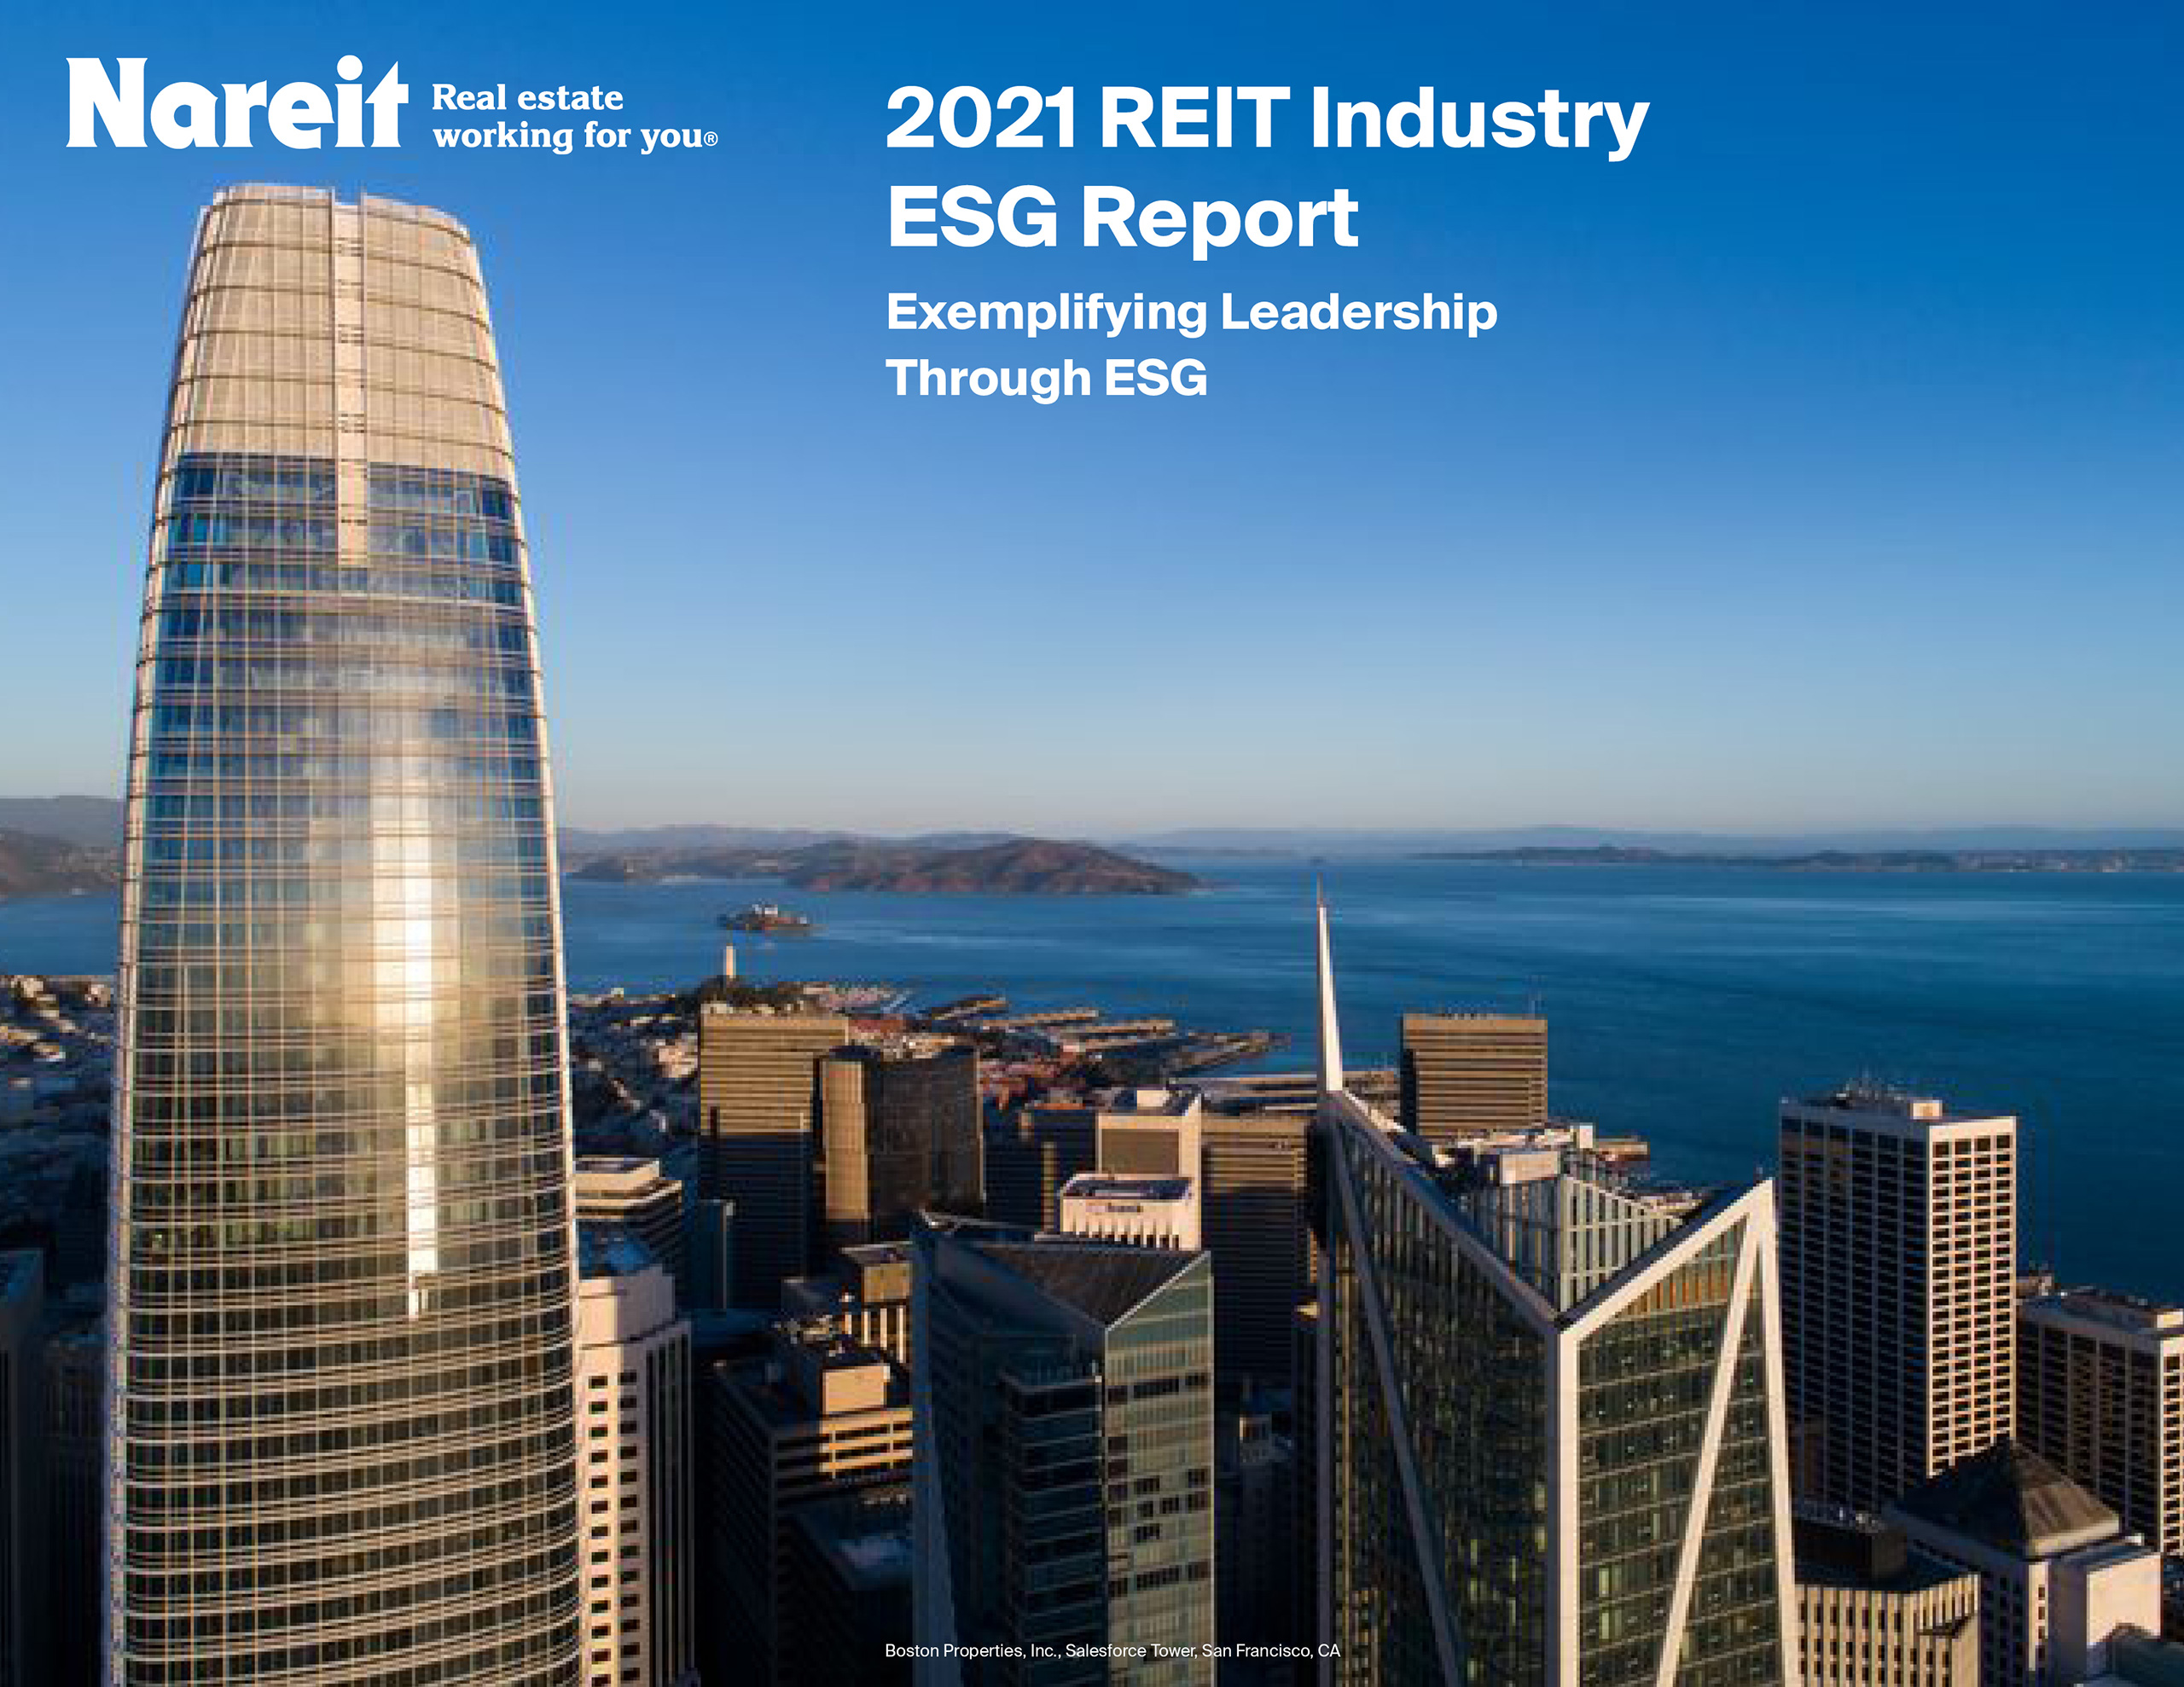 Nareit 2021 REIT Industry ESG Report